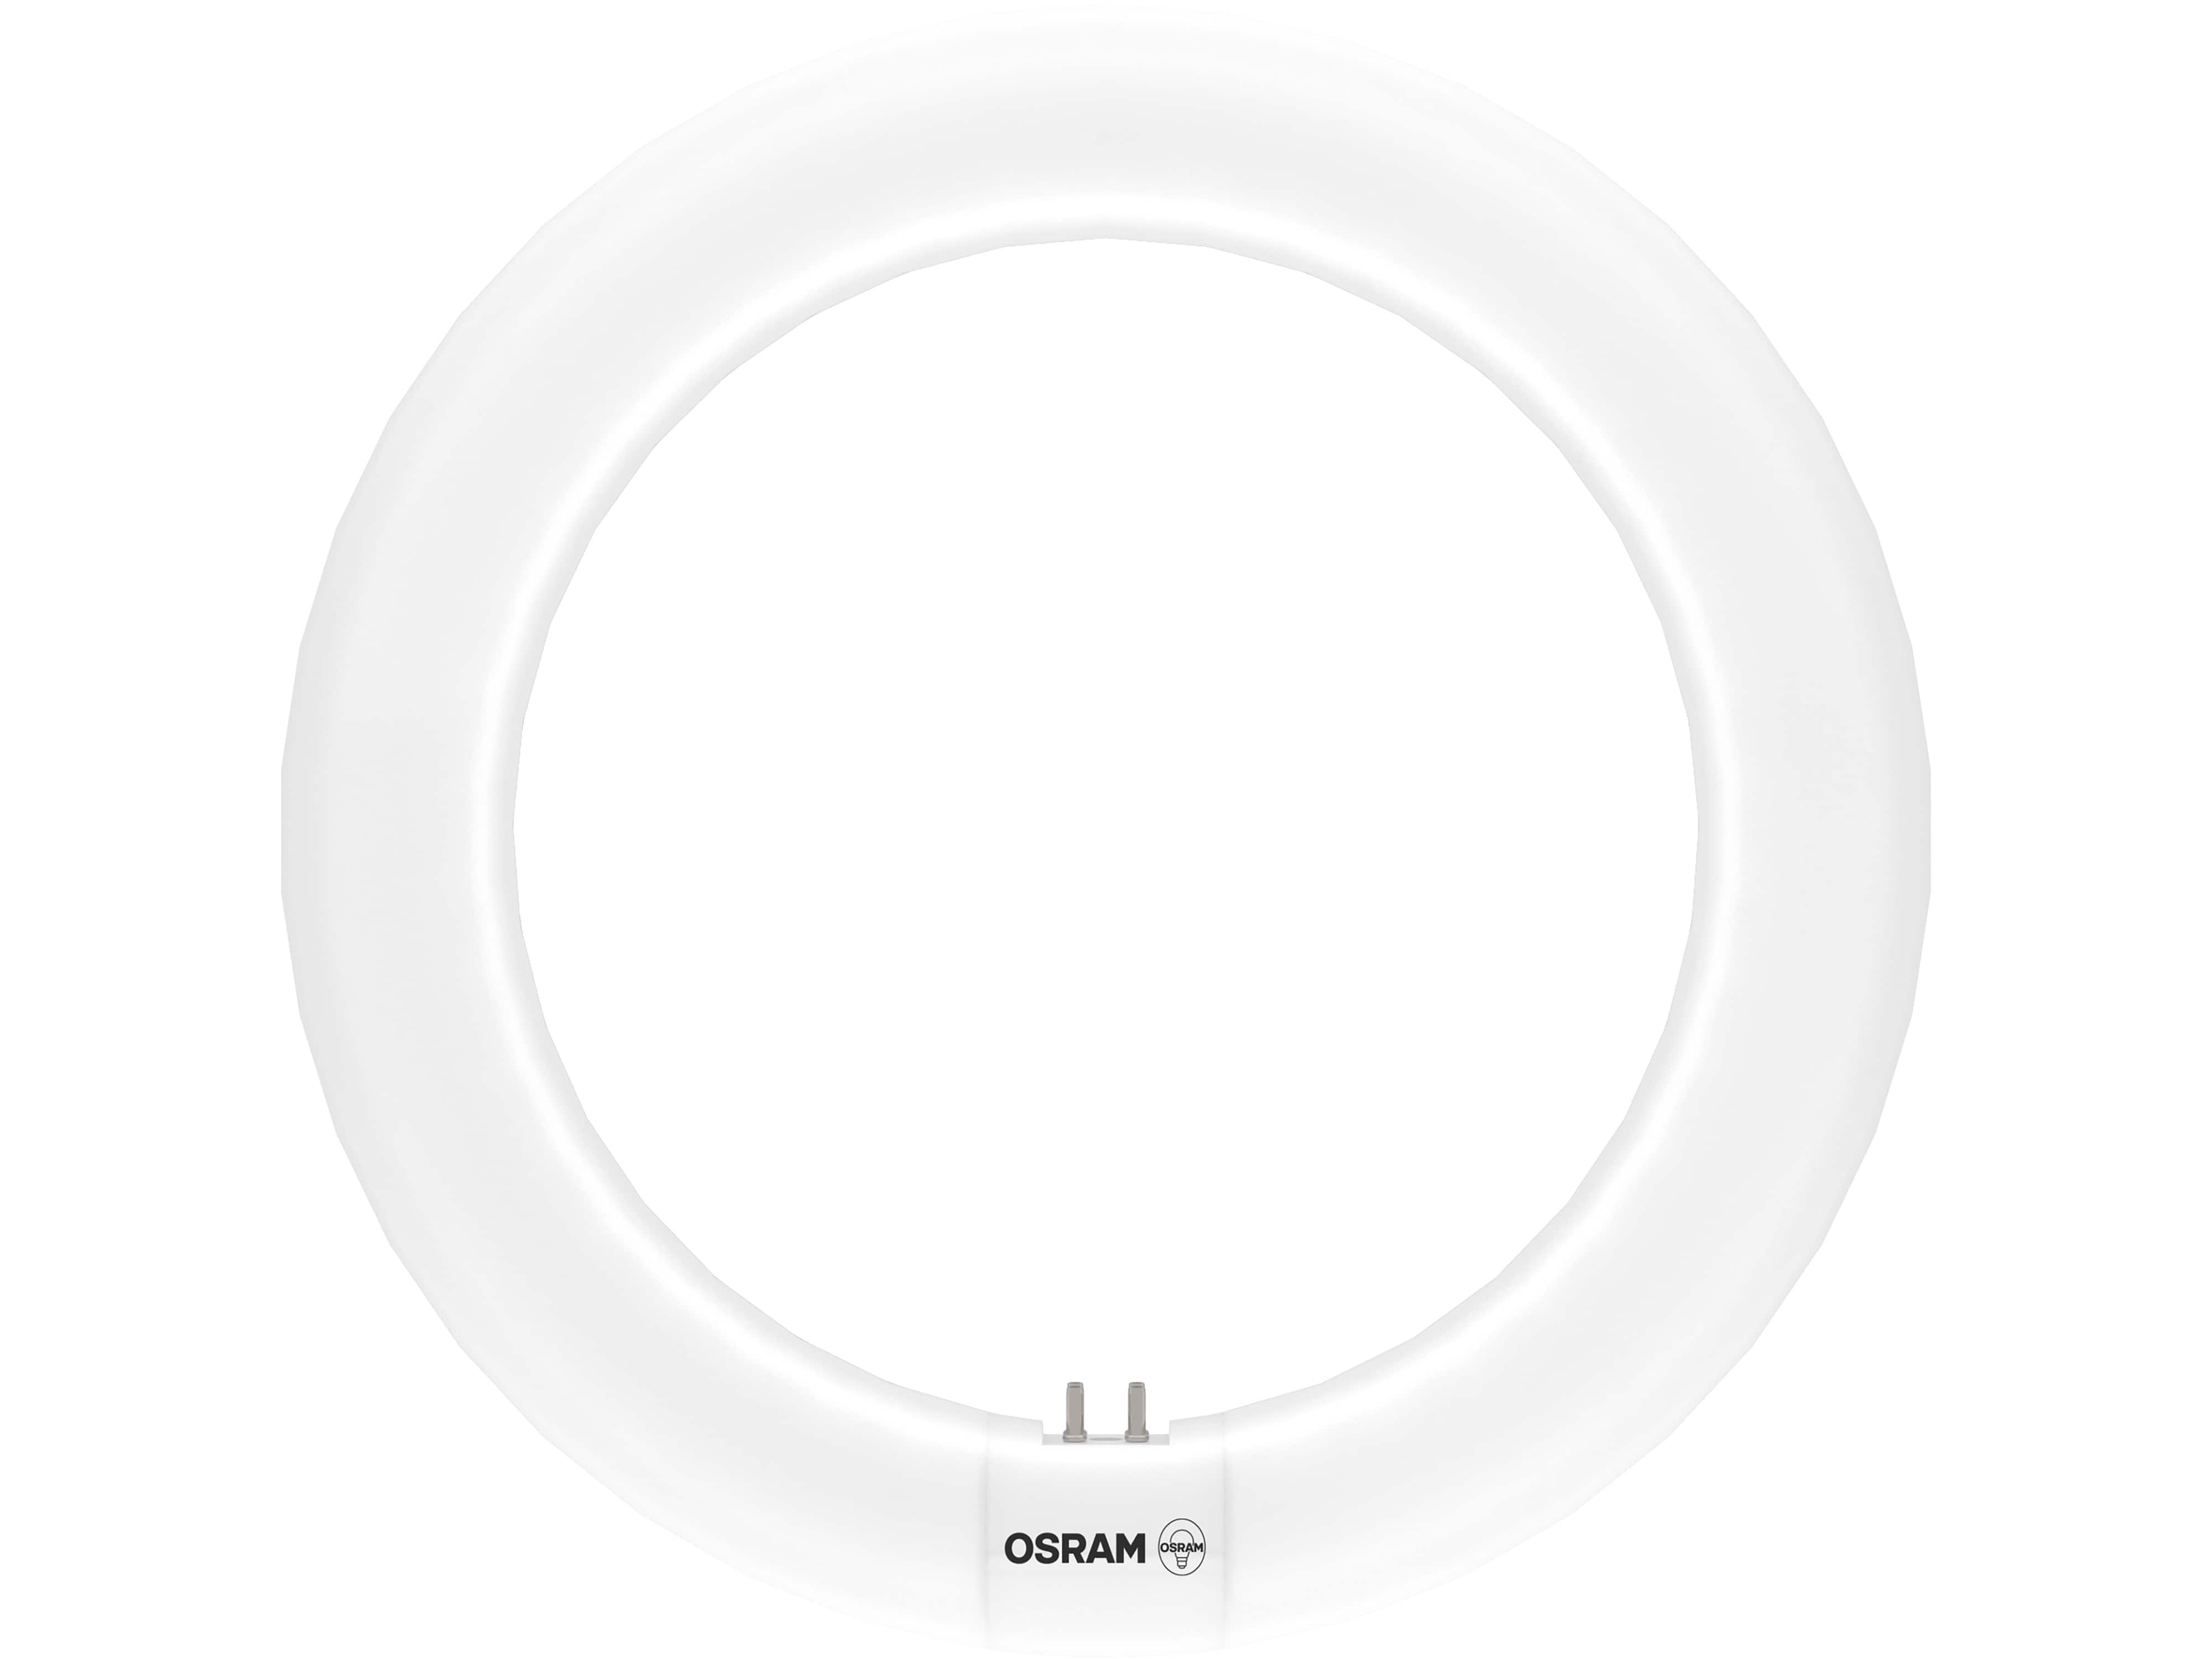 OSRAM LED-Röhre T9, Ringform, G10q, EEK: E, 11W, 1320lm, 4000K